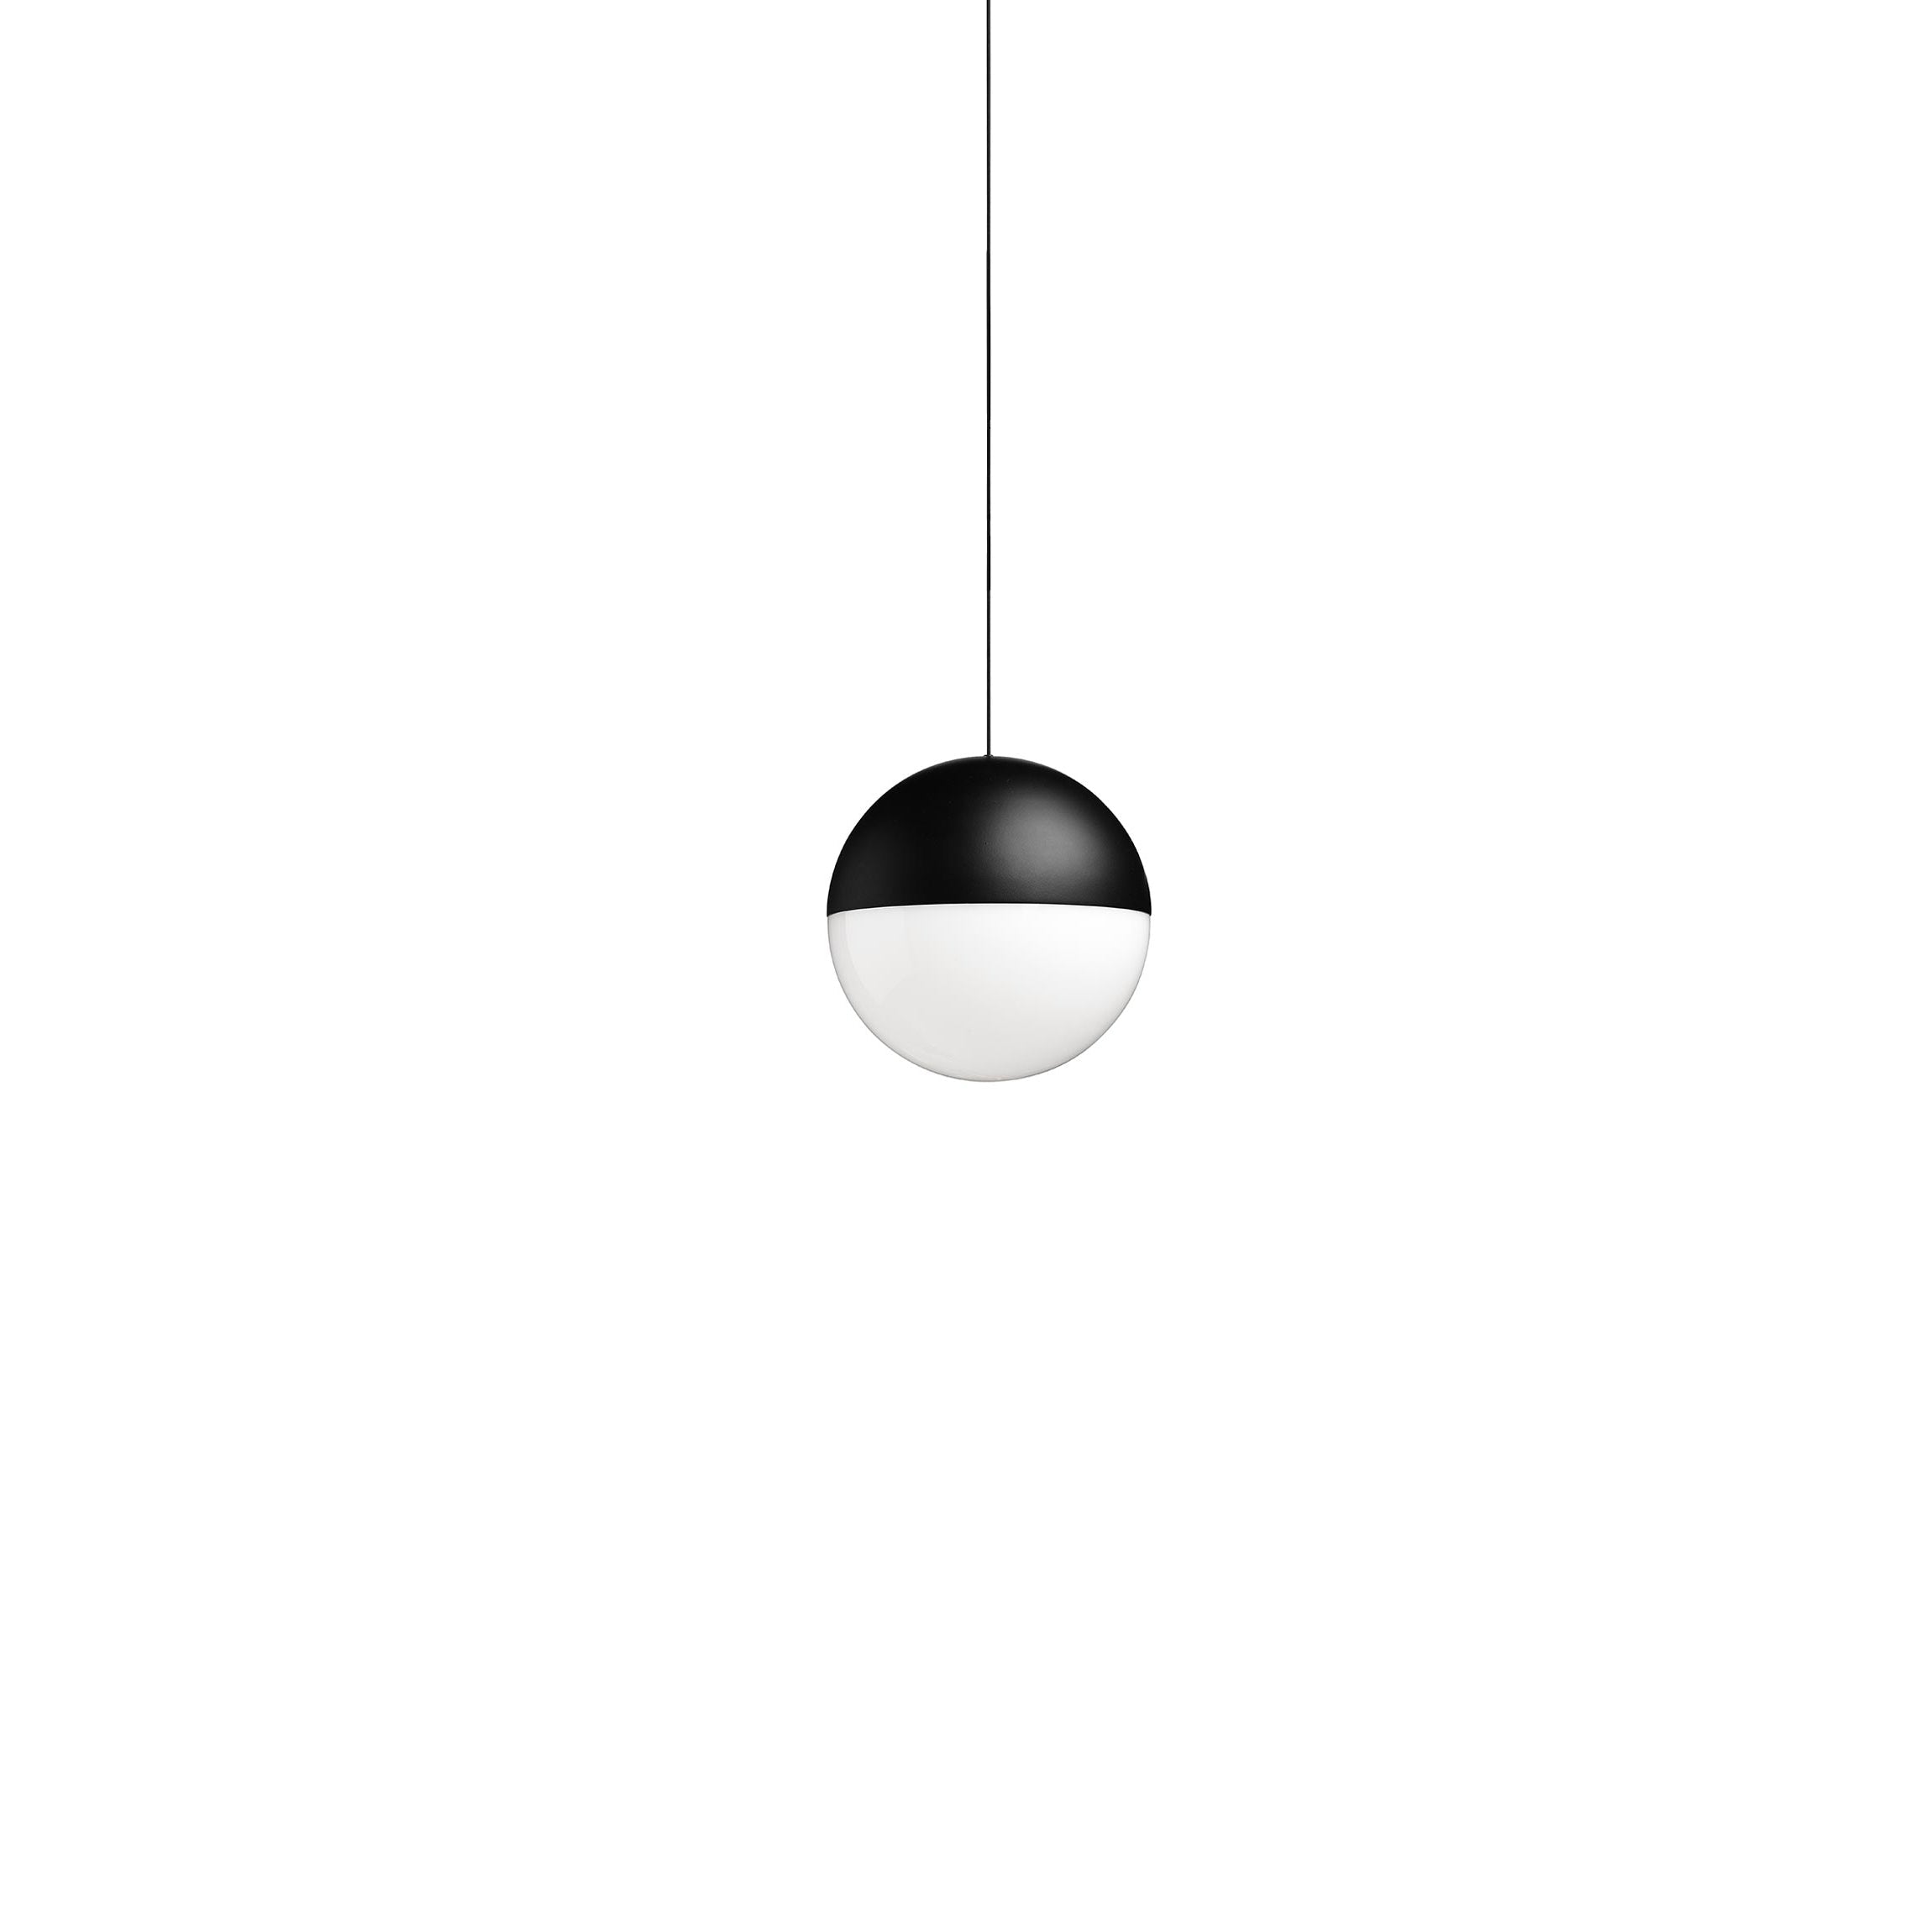 Flos String Light Ball Head Pendant Lamp 22m svart med sensordimmer på kabel